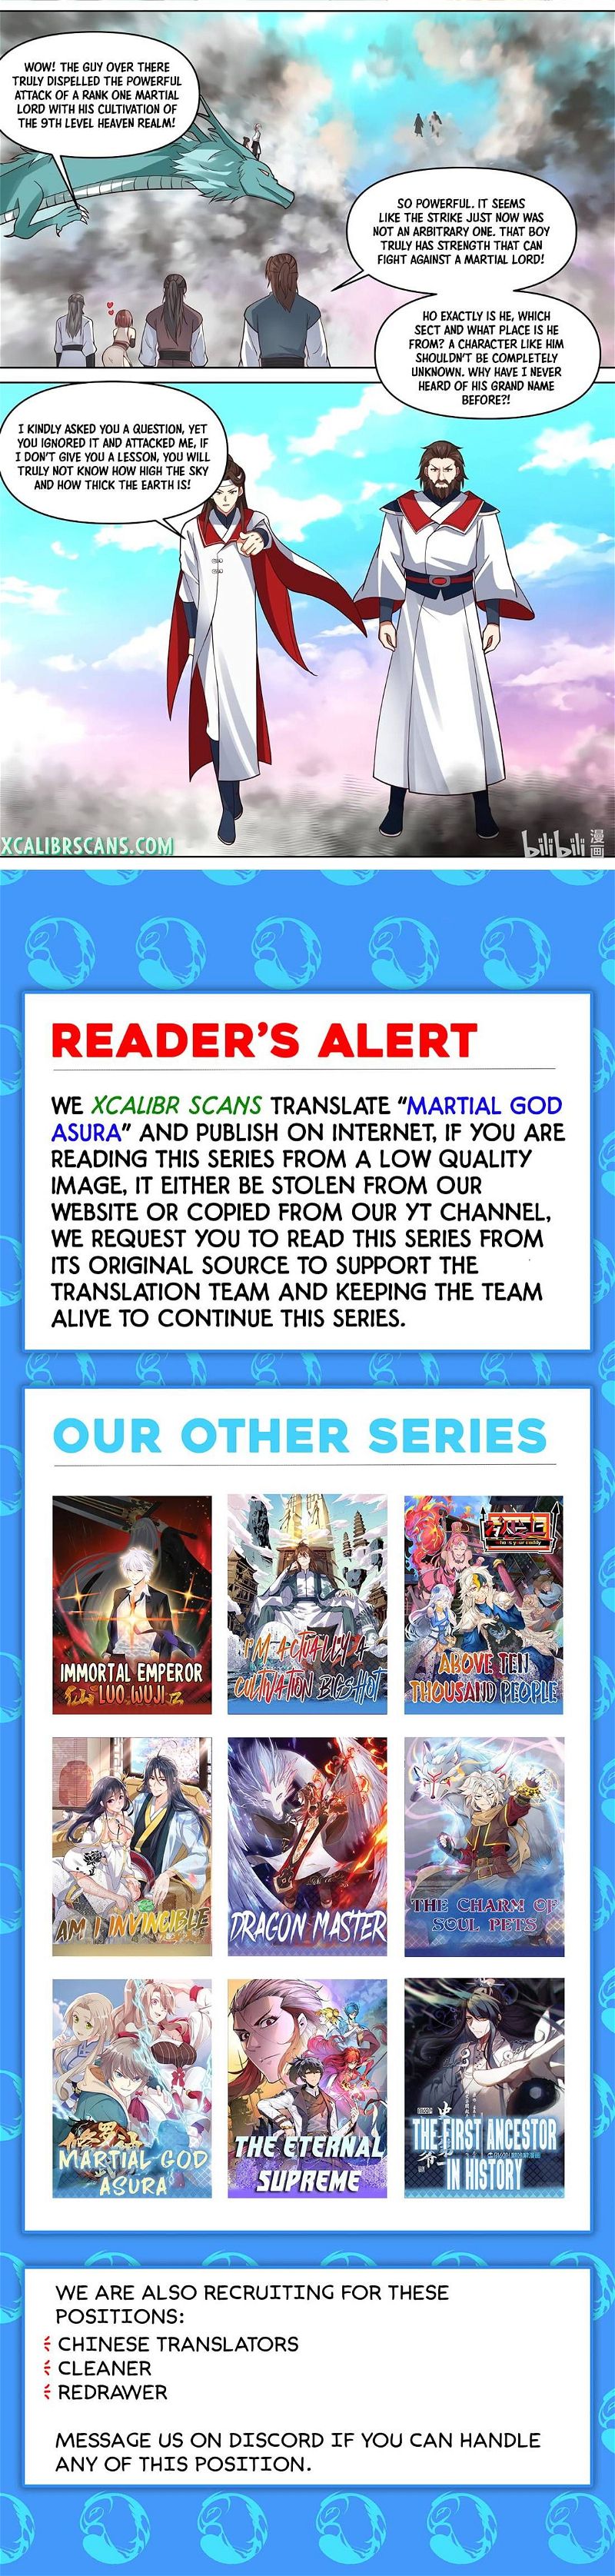 Martial God Asura Chapter 442 page 10